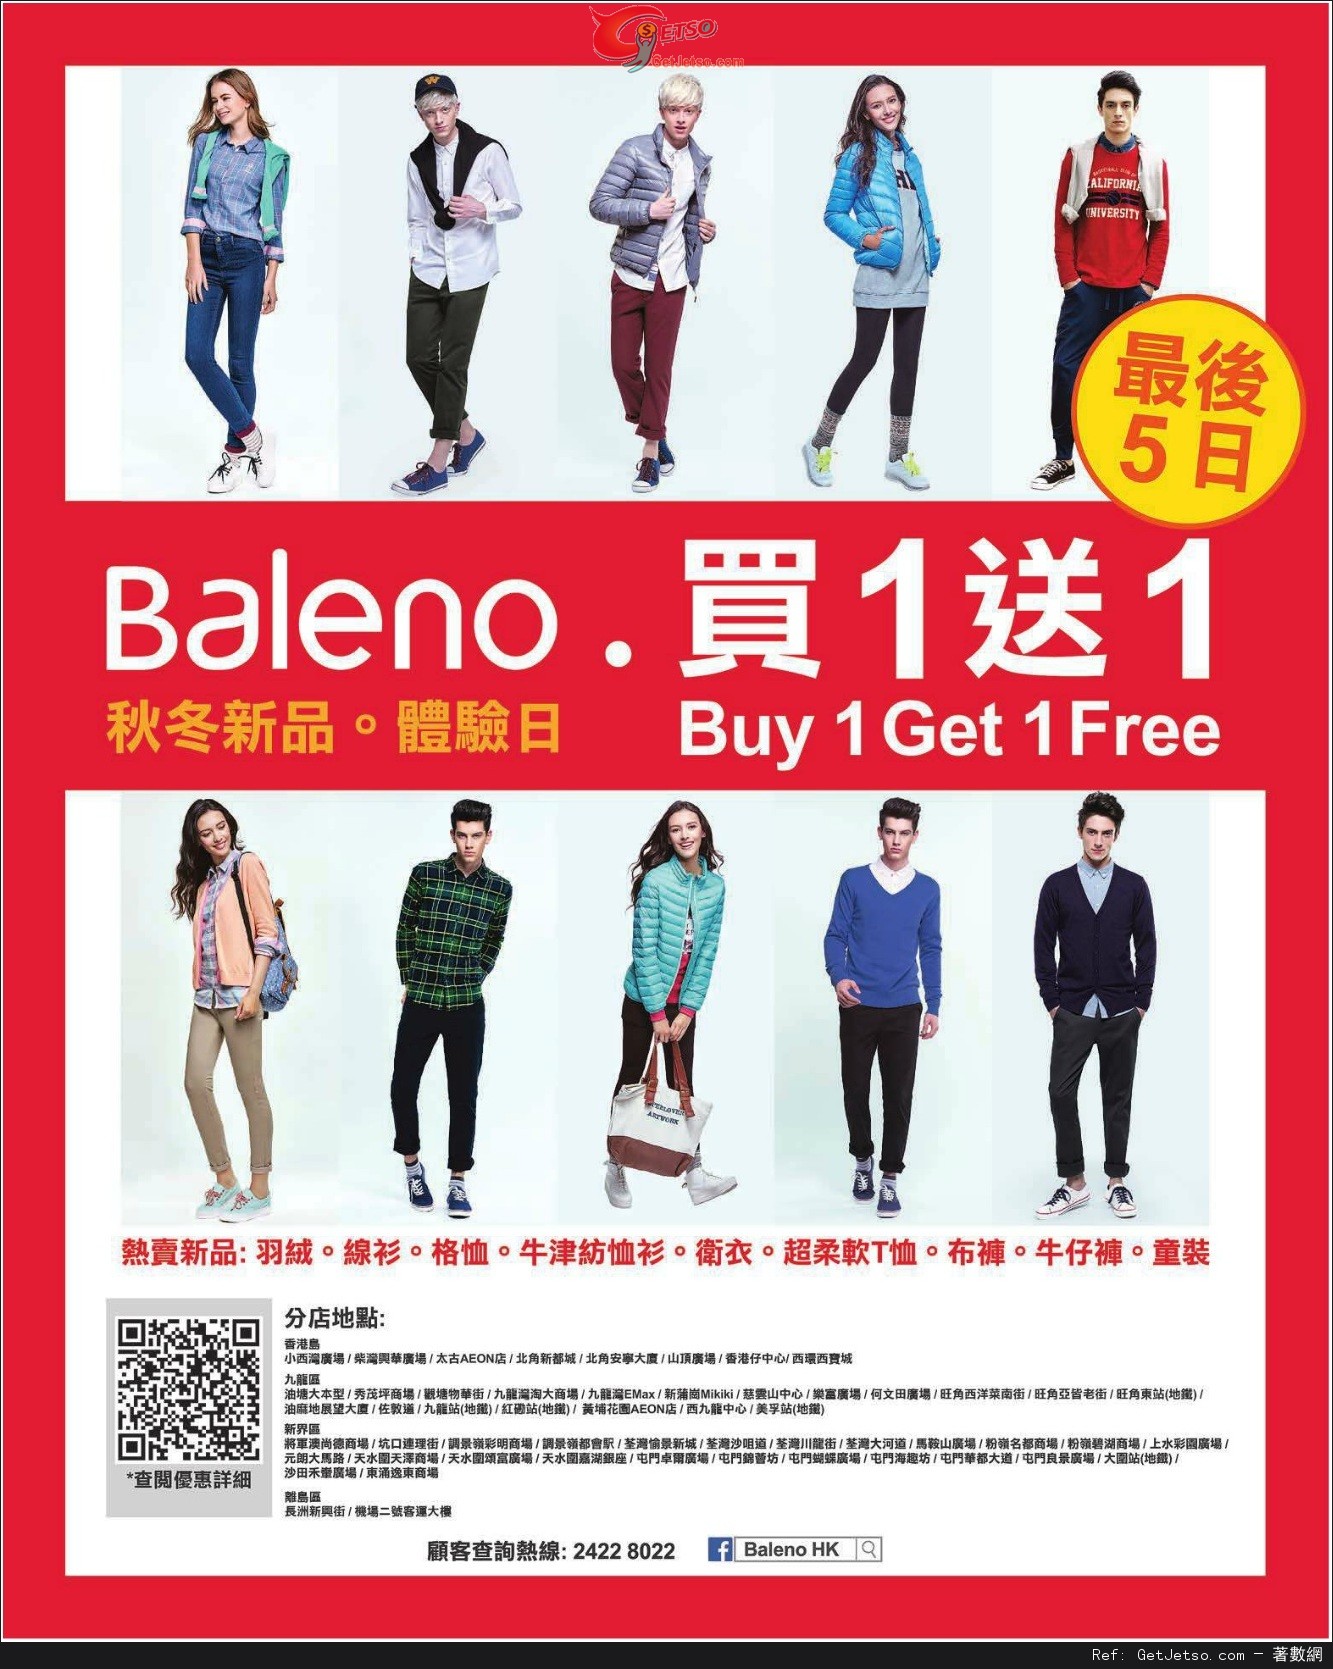 Baleno 秋冬體驗日全場上下身秋冬服裝買1送1優惠(至15年10月4日)圖片1